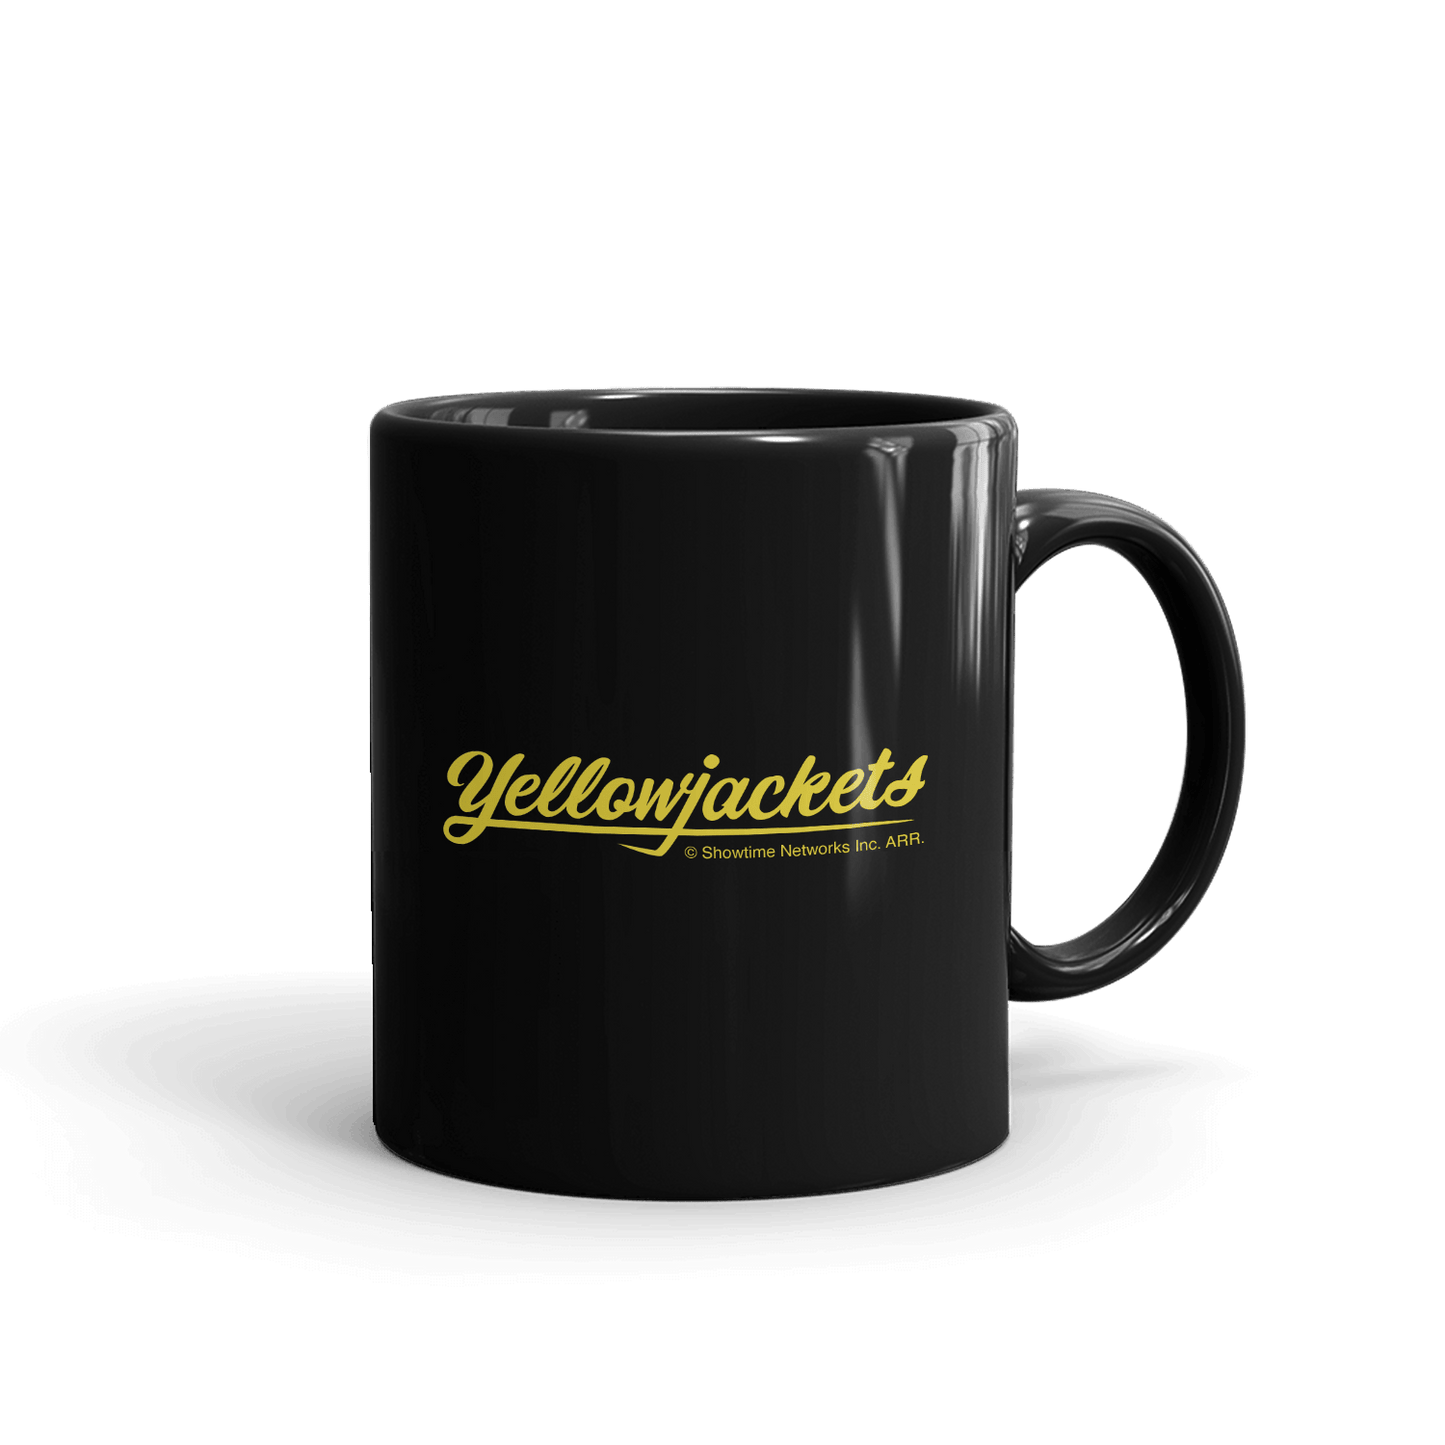 Yellowjackets Care Assistant Black Mug - Paramount Shop